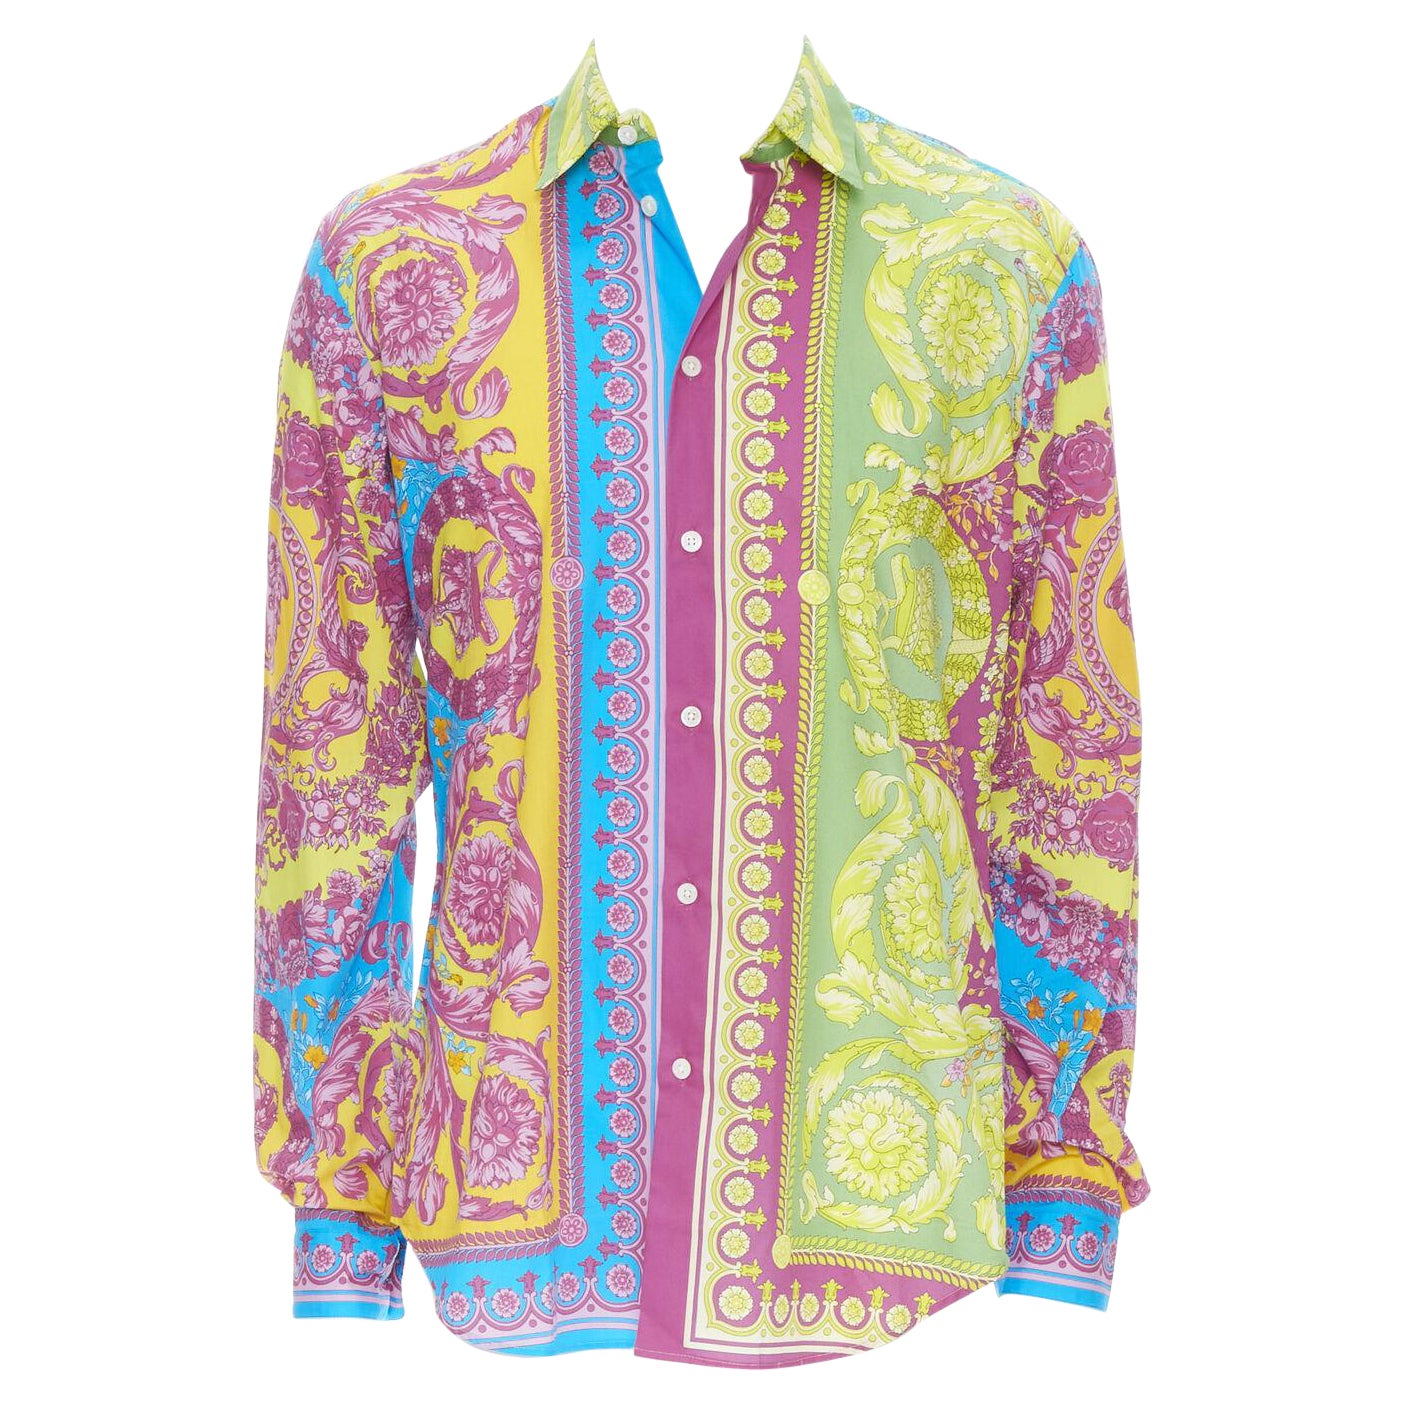 Neues VERSACE Pop Neon Barocco Technicolor Baumwollhemd mit Barockdruck EU38 S im Angebot